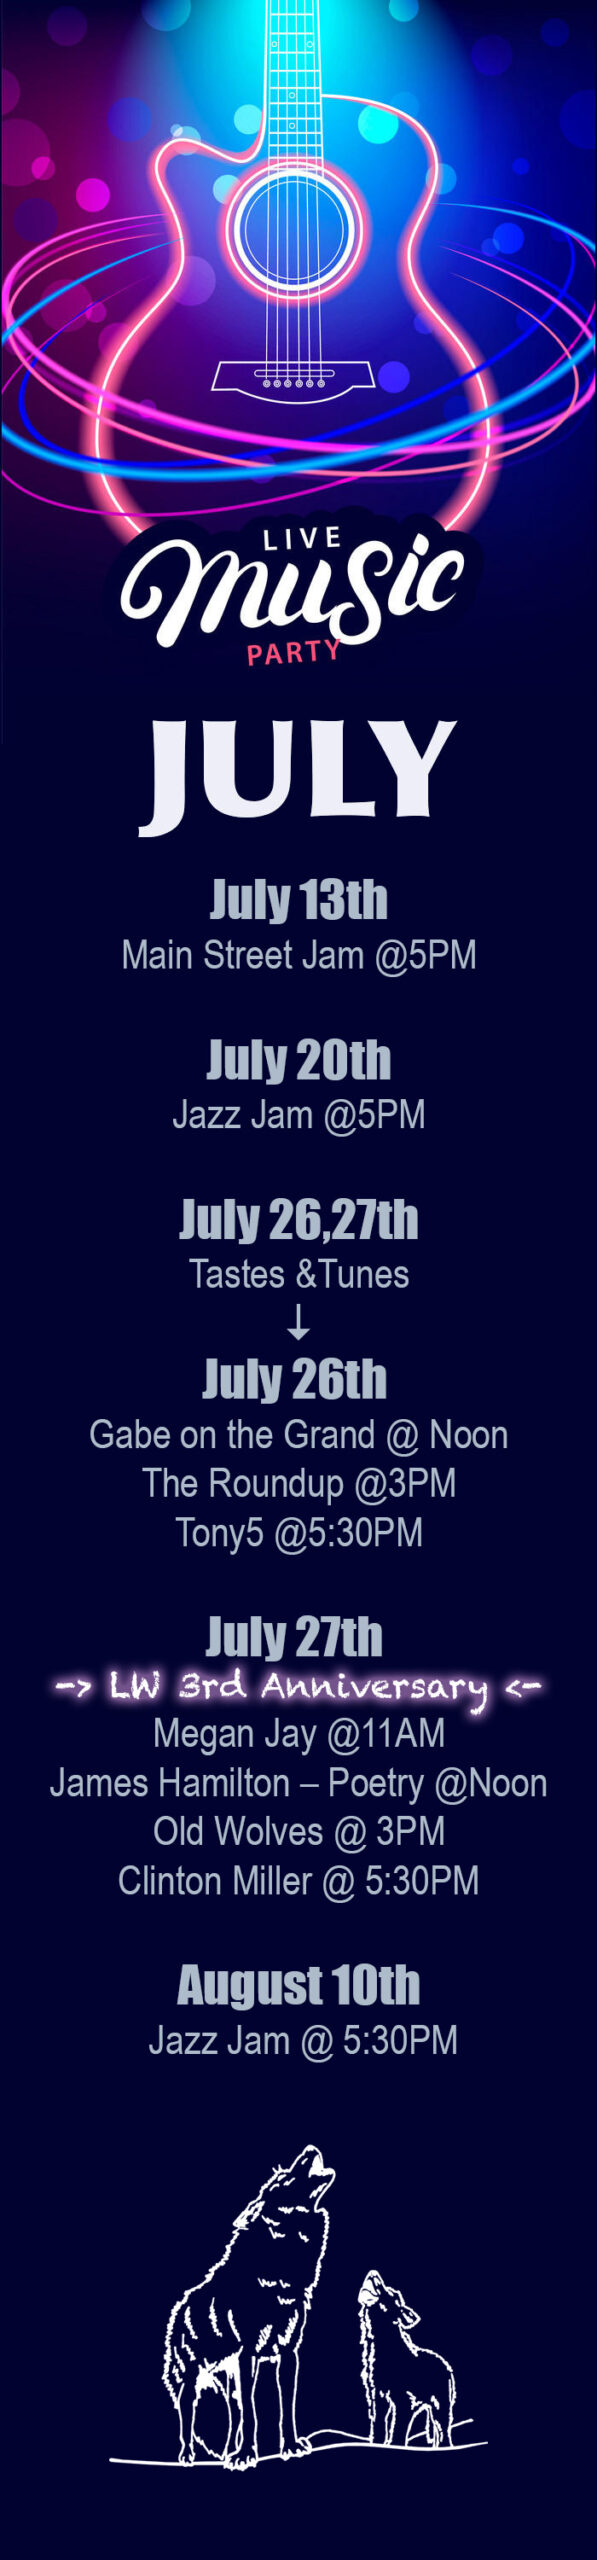 Main Street Jam Jazz Jam Tastes & Tunes Gabe on the Grand Desparados Tony5 Megan Jay James Hamilton – Poetry Old Wolves Clinton Miller